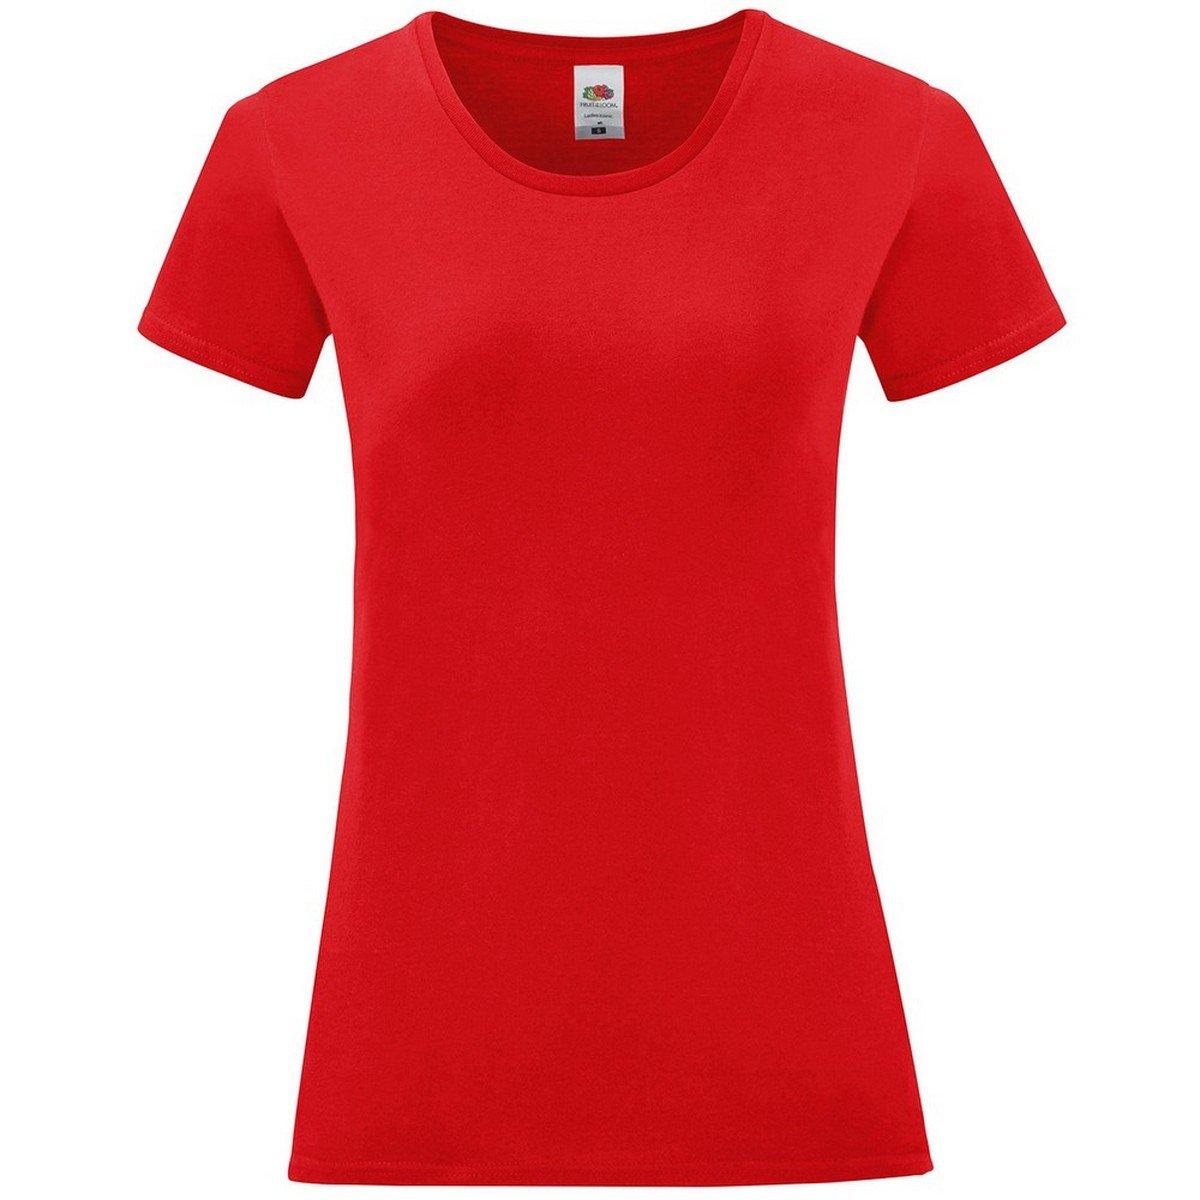 Iconic Tshirt Damen Rot Bunt S von Fruit of the Loom